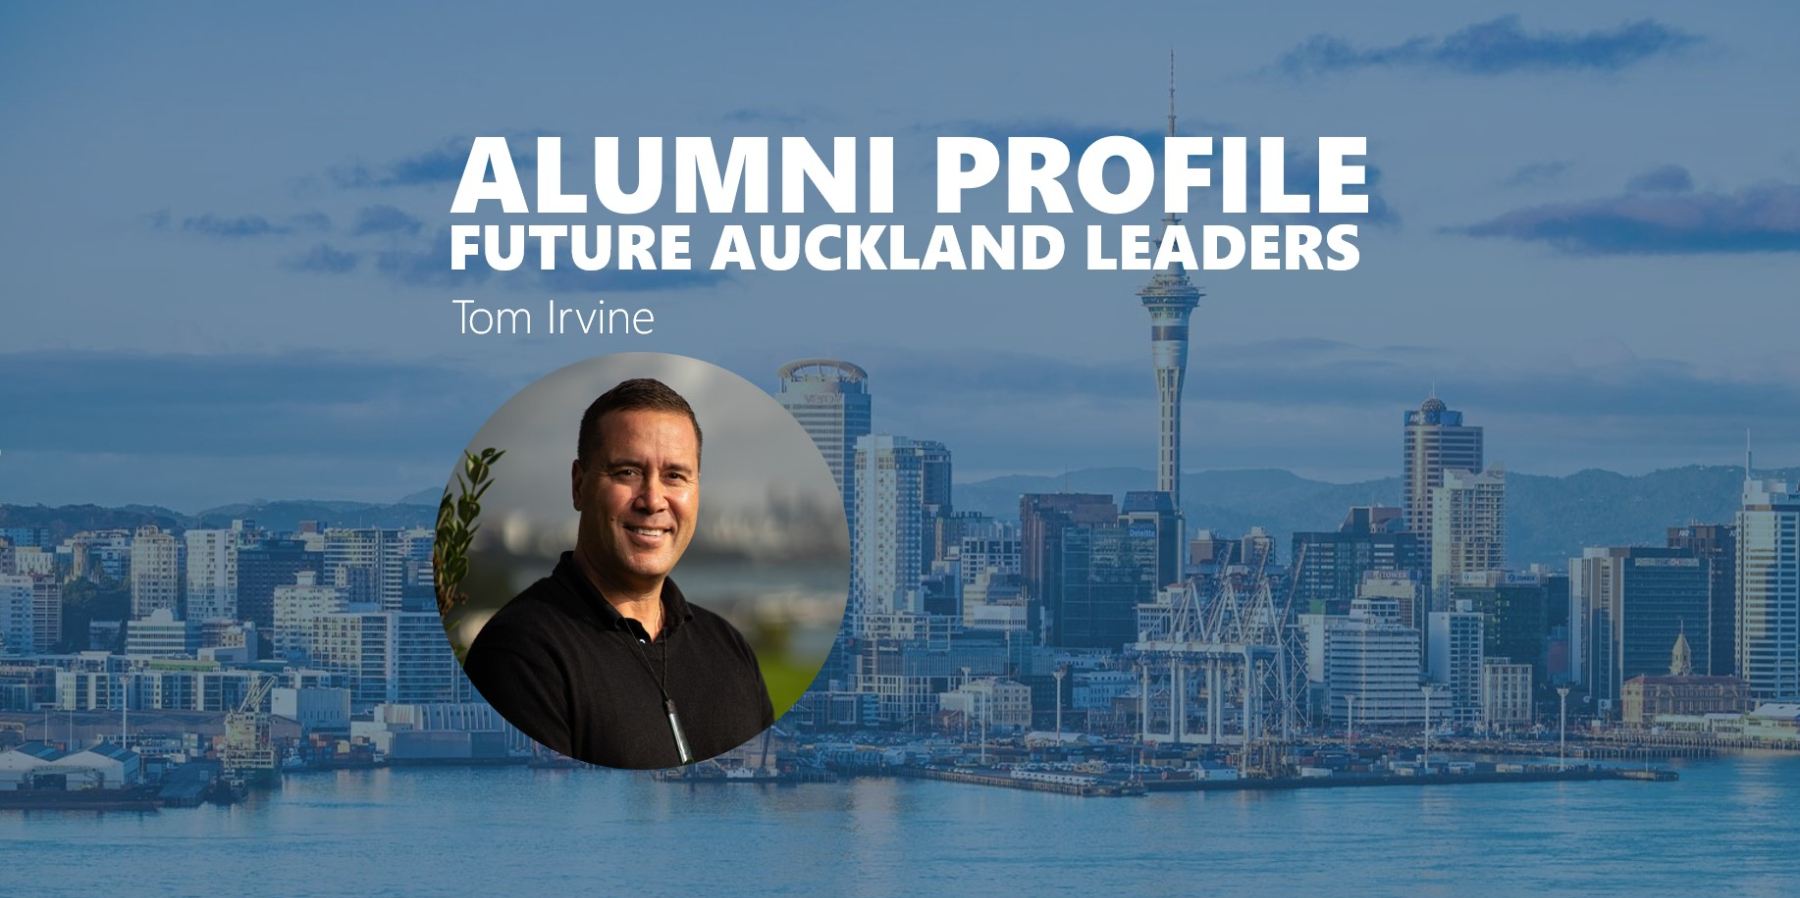 Tom Irvine’s Future Auckland Leaders experience